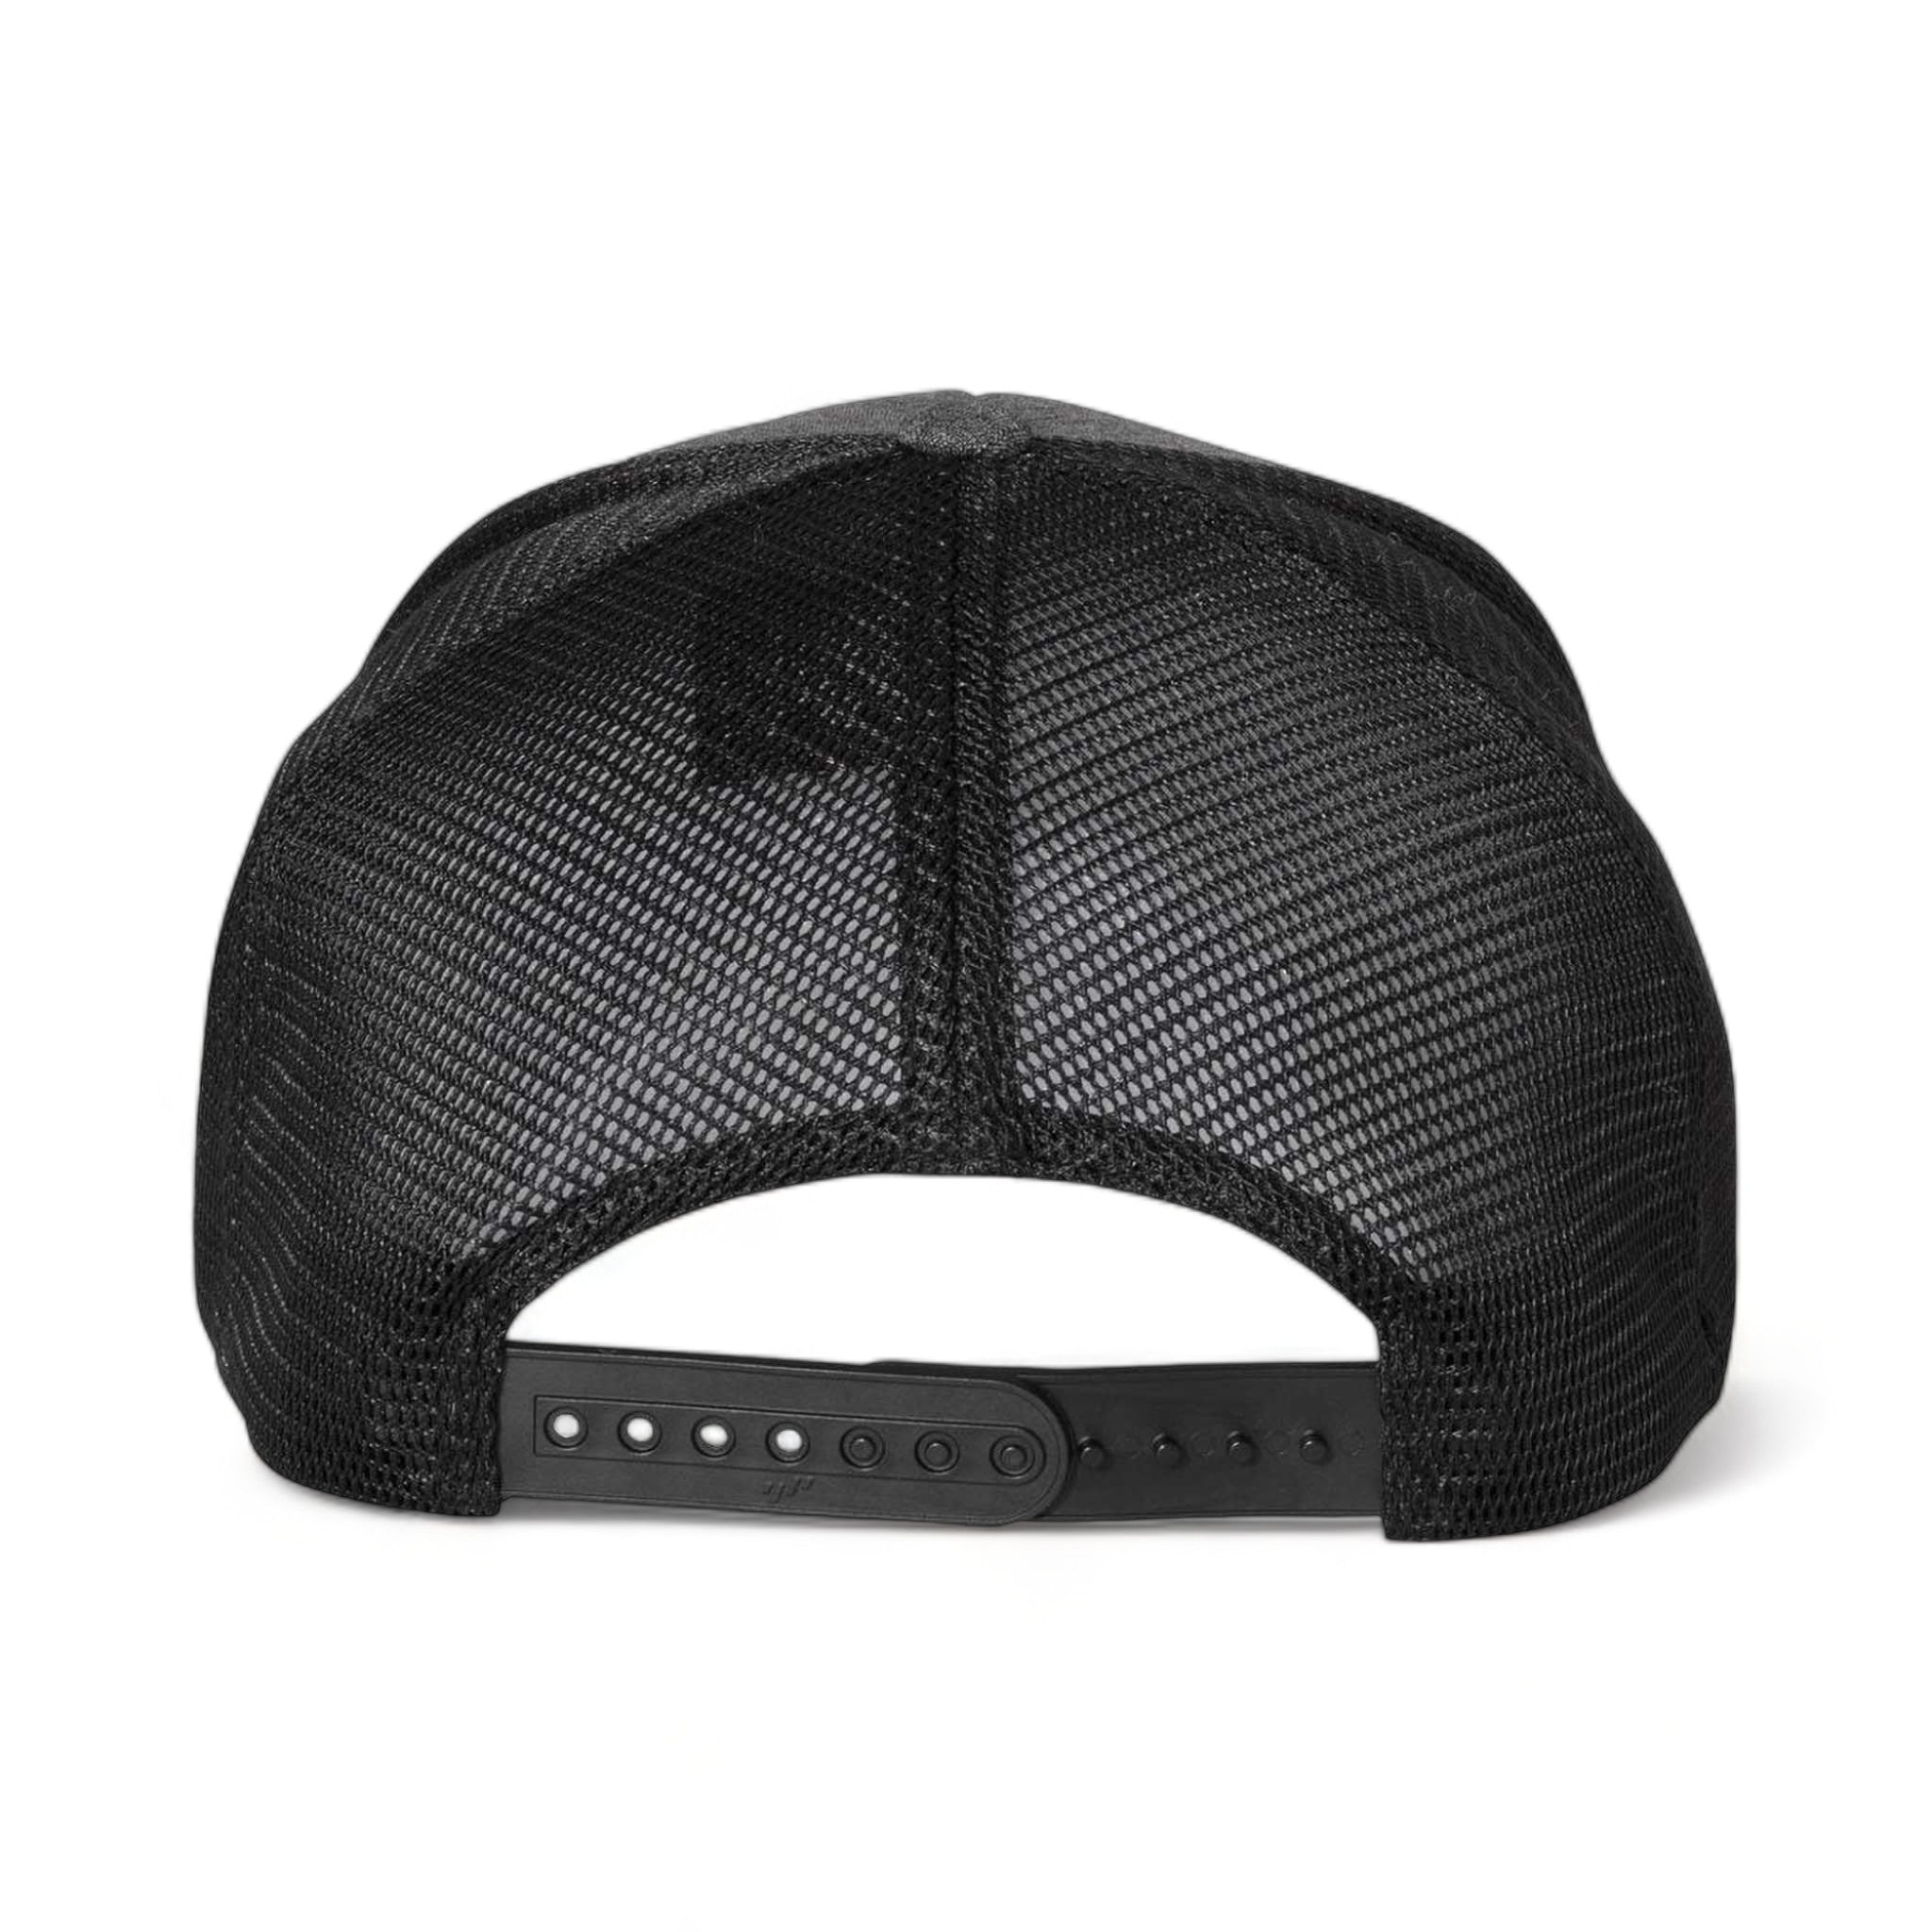 Back view of Flexfit 110M custom hat in melange charcoal and black